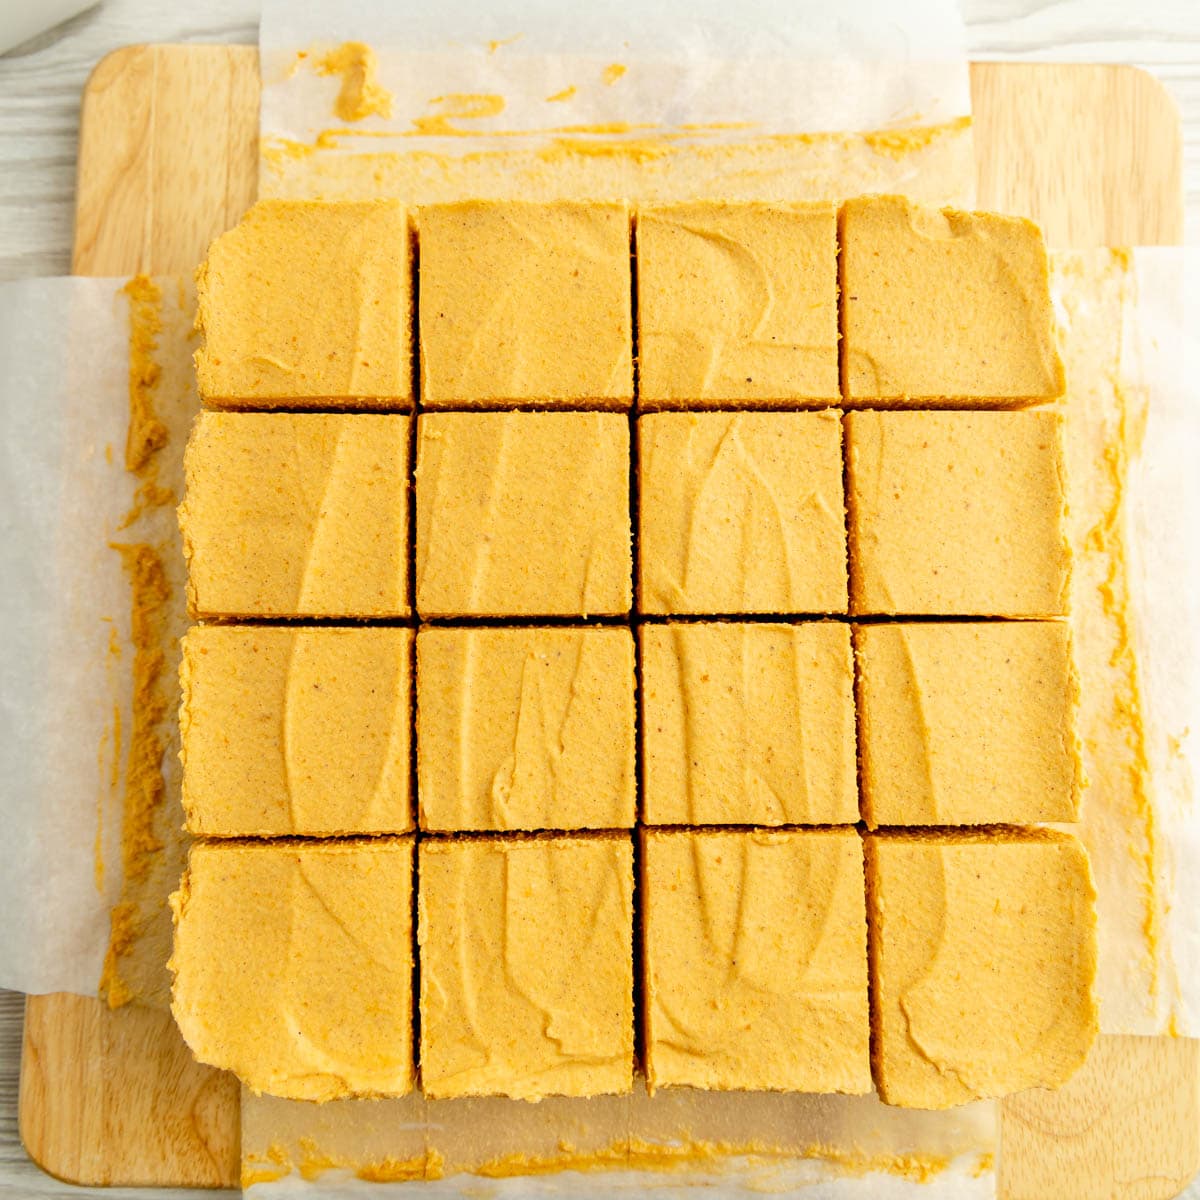 Pumpkin cheesecake bars cut into 16 squares.